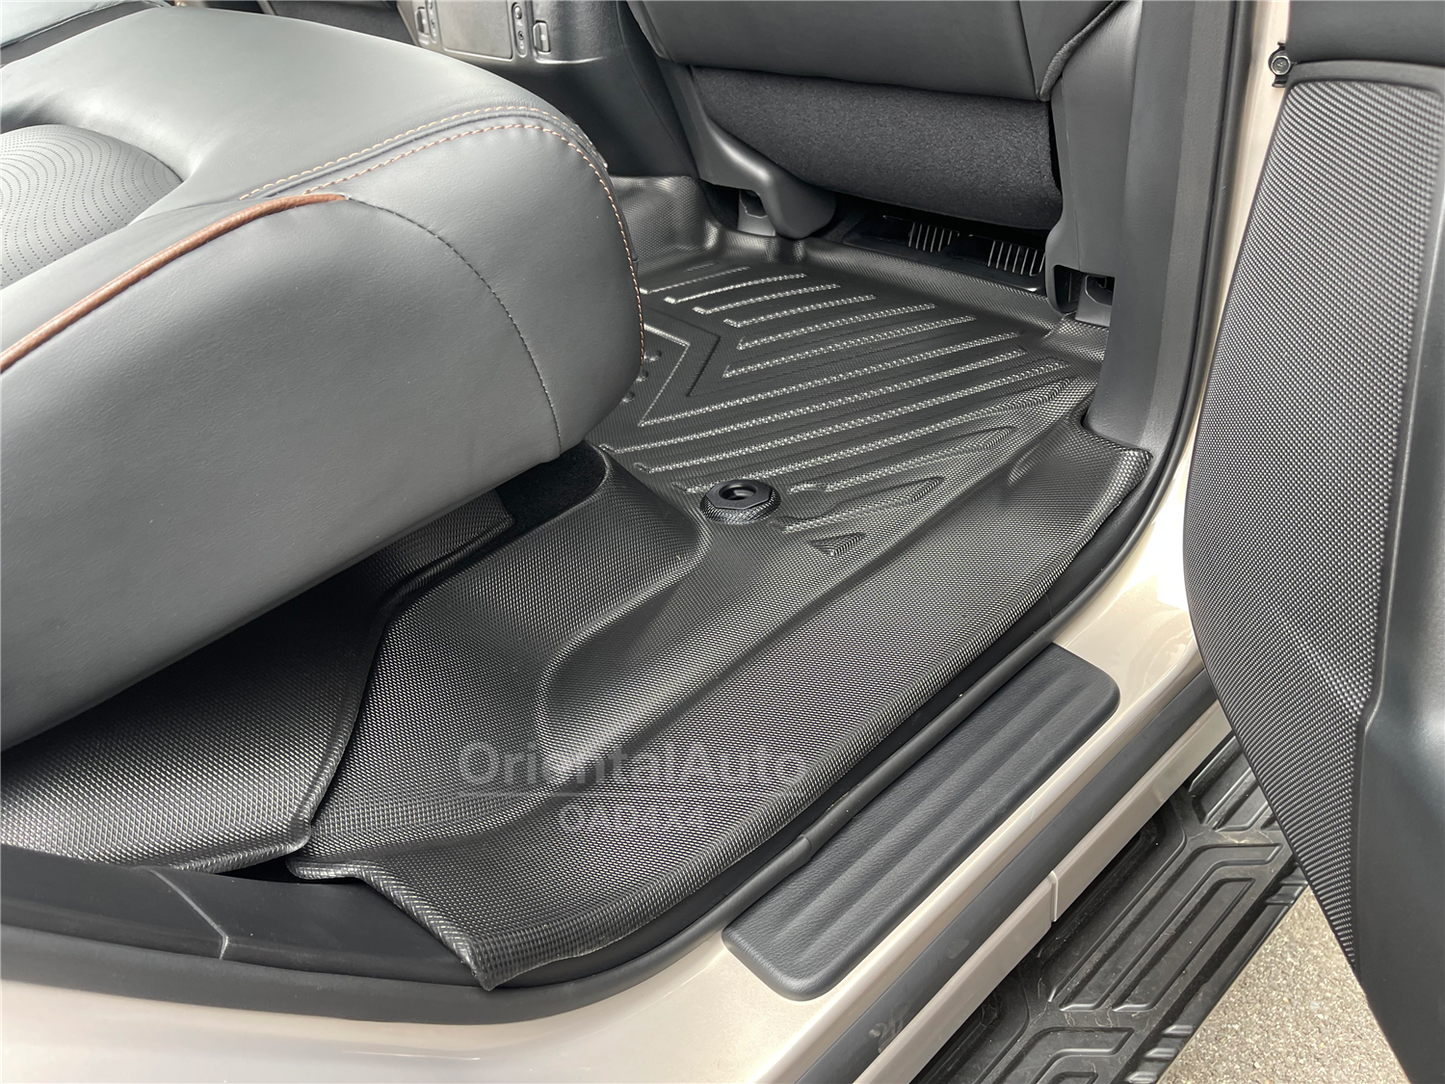 5D TPE Floor Mats for Nissan Patrol Y62 2012-Onwards Tailored Door Sill Covered Car Floor Mat Liner